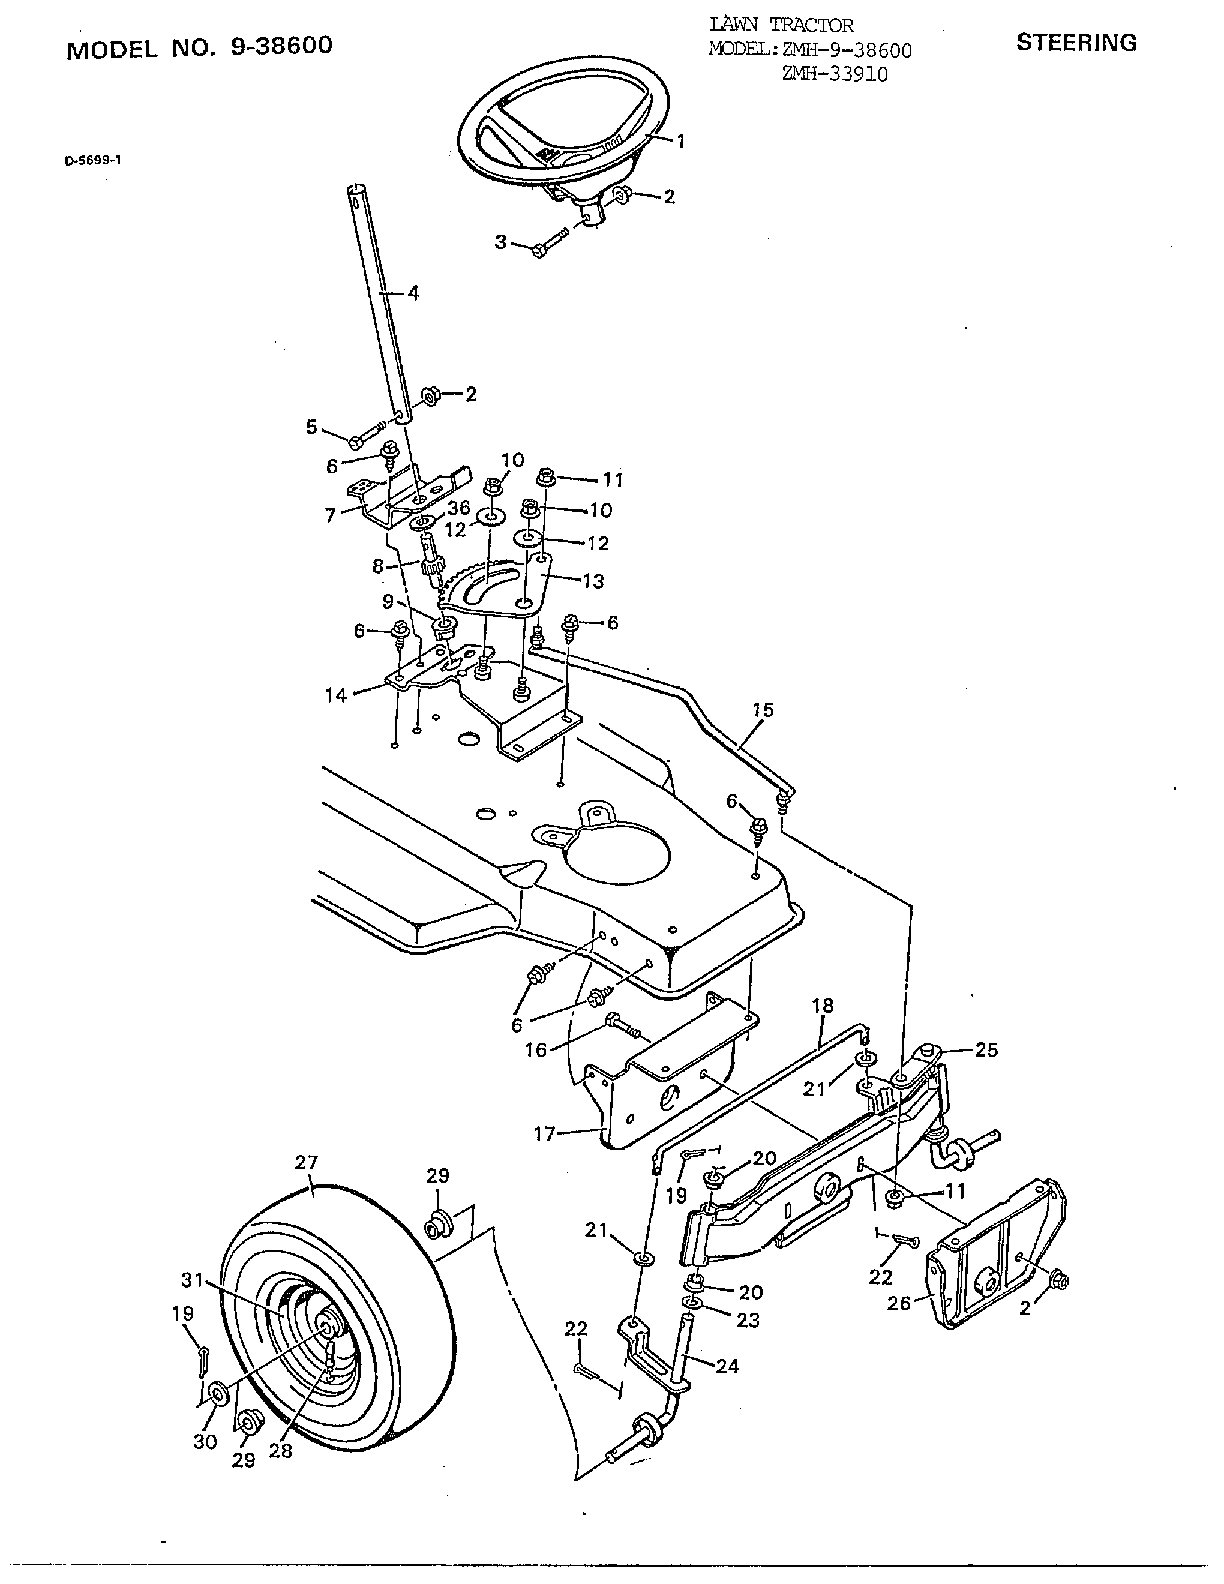 Steering Diagram  U0026 Parts List For Model 33910 Murray